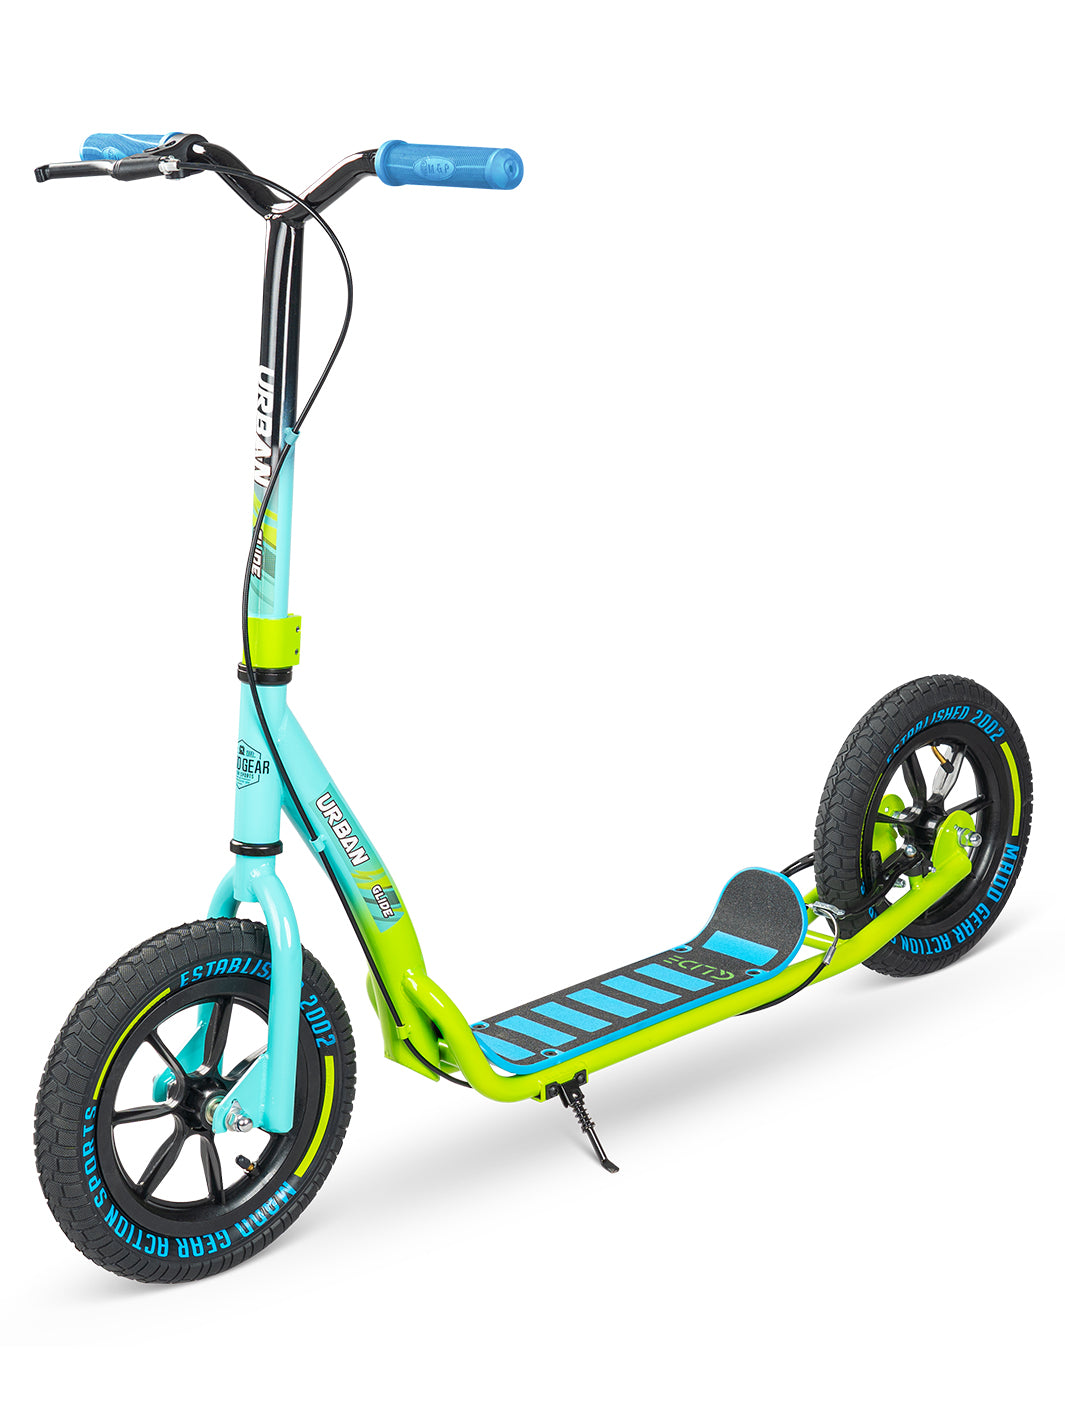 maddgear urban glide scooter blue teal green adults school college